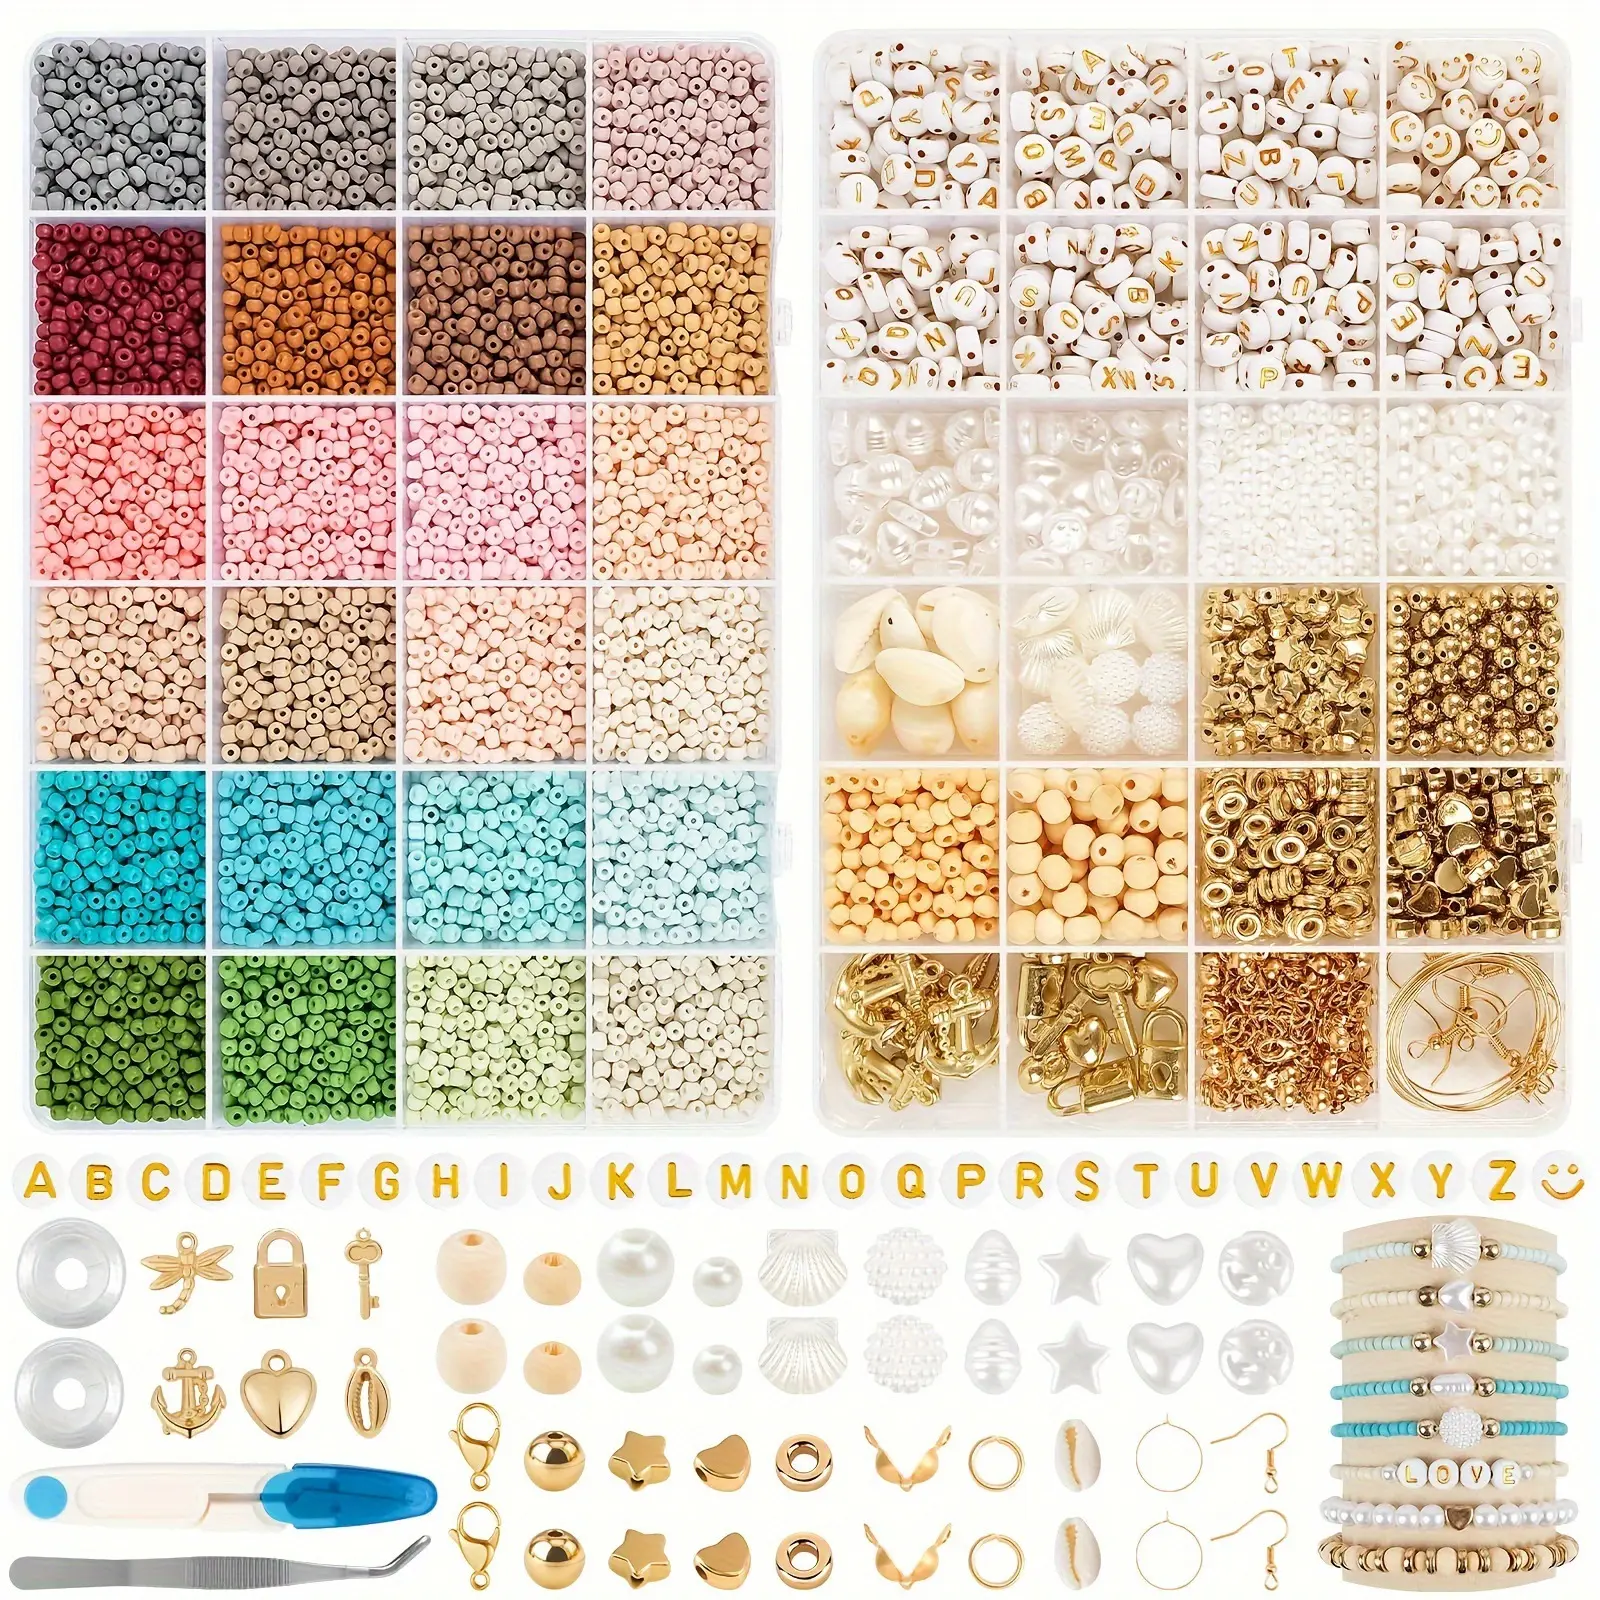 3mm glass seed beads simple kit DIY handmade beading letter beads necklace bracelet